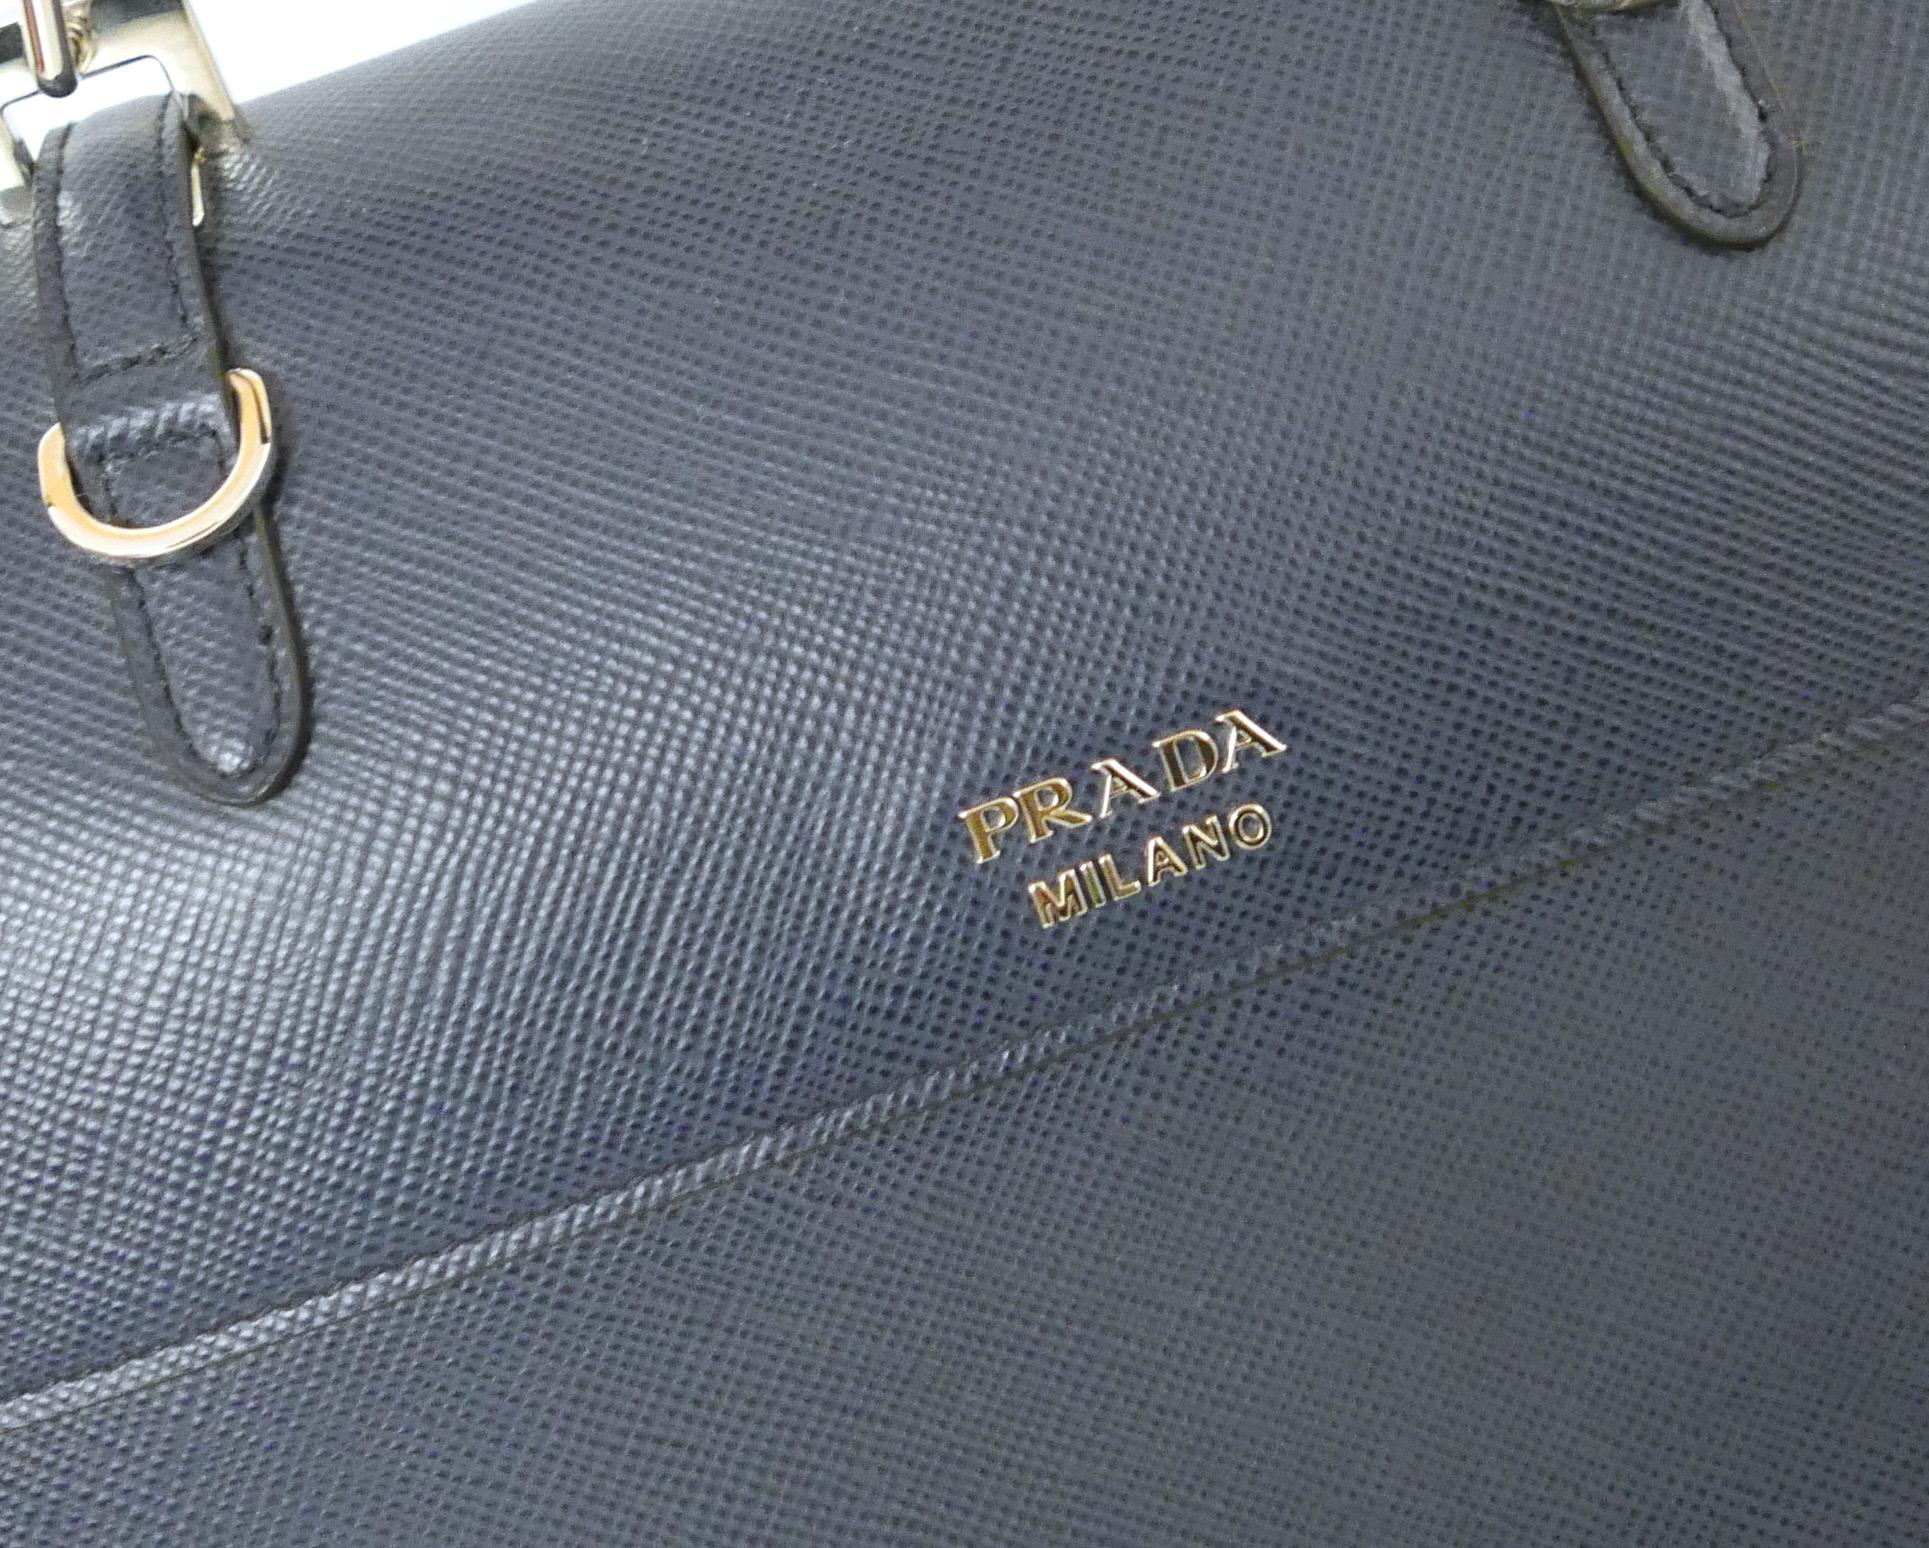 Prada AW14 Blue Saffiano Leather Double Satchel Bag For Sale 1